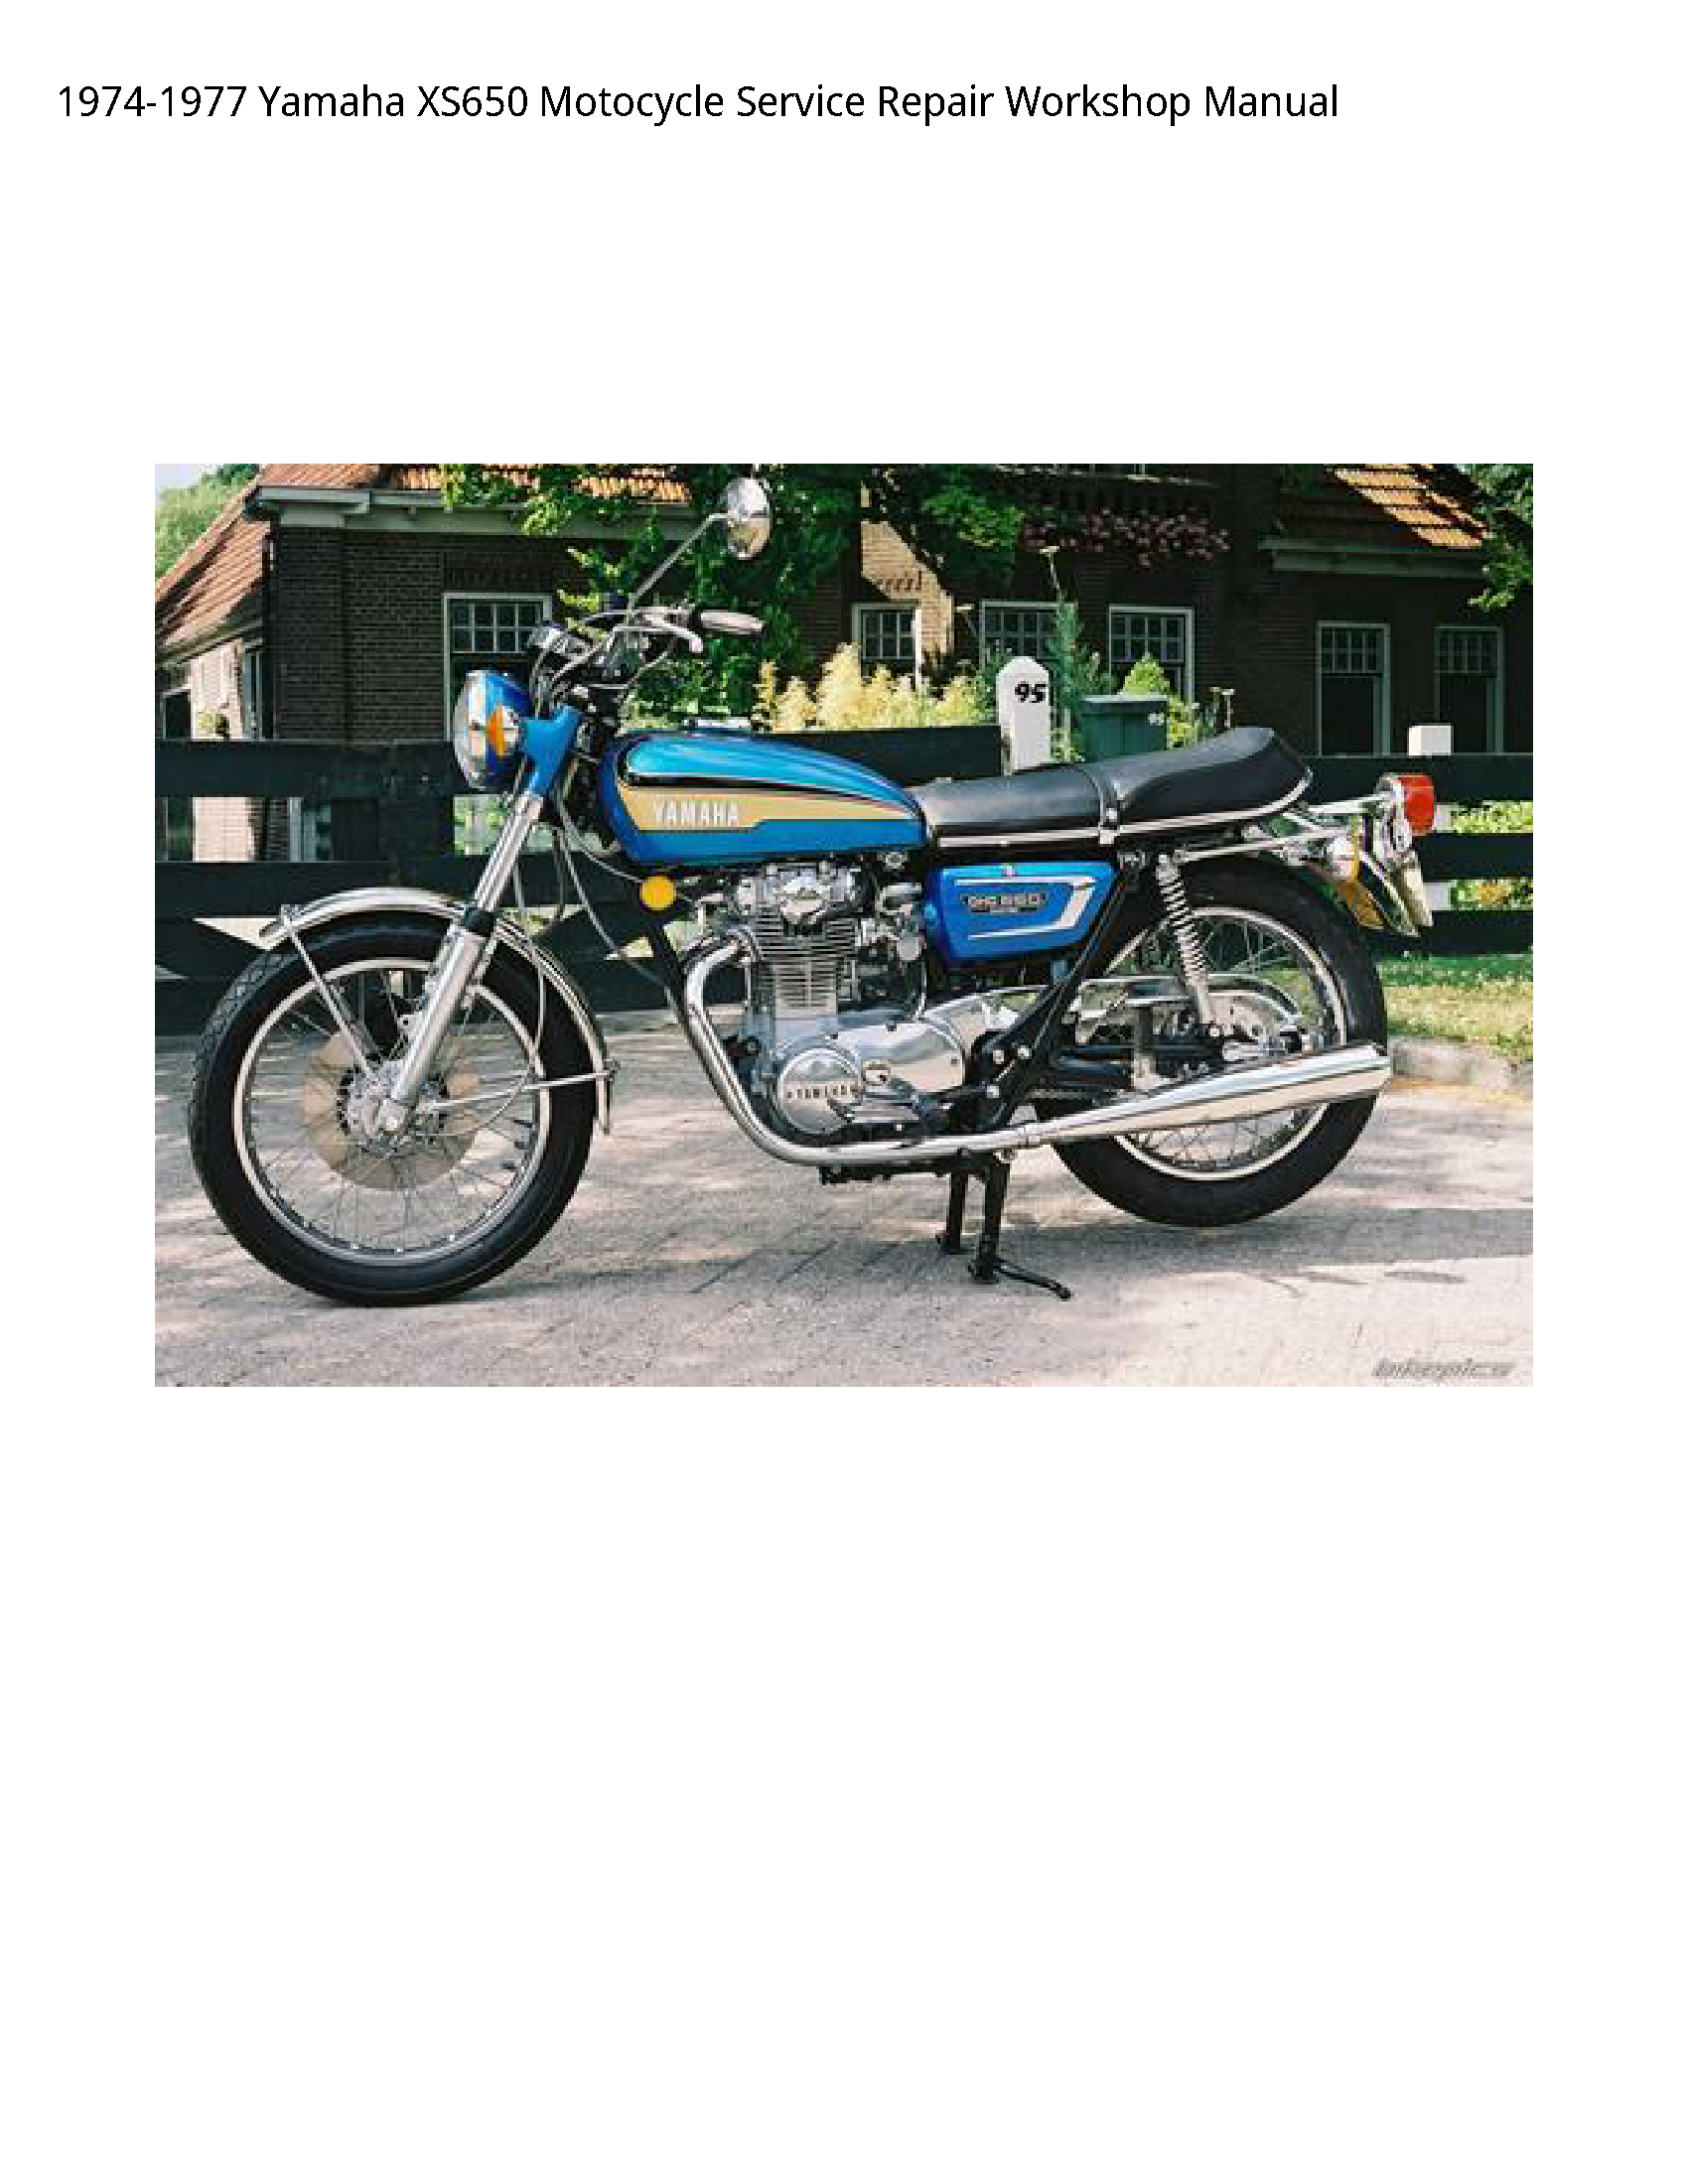 Yamaha XS650 Motocycle manual